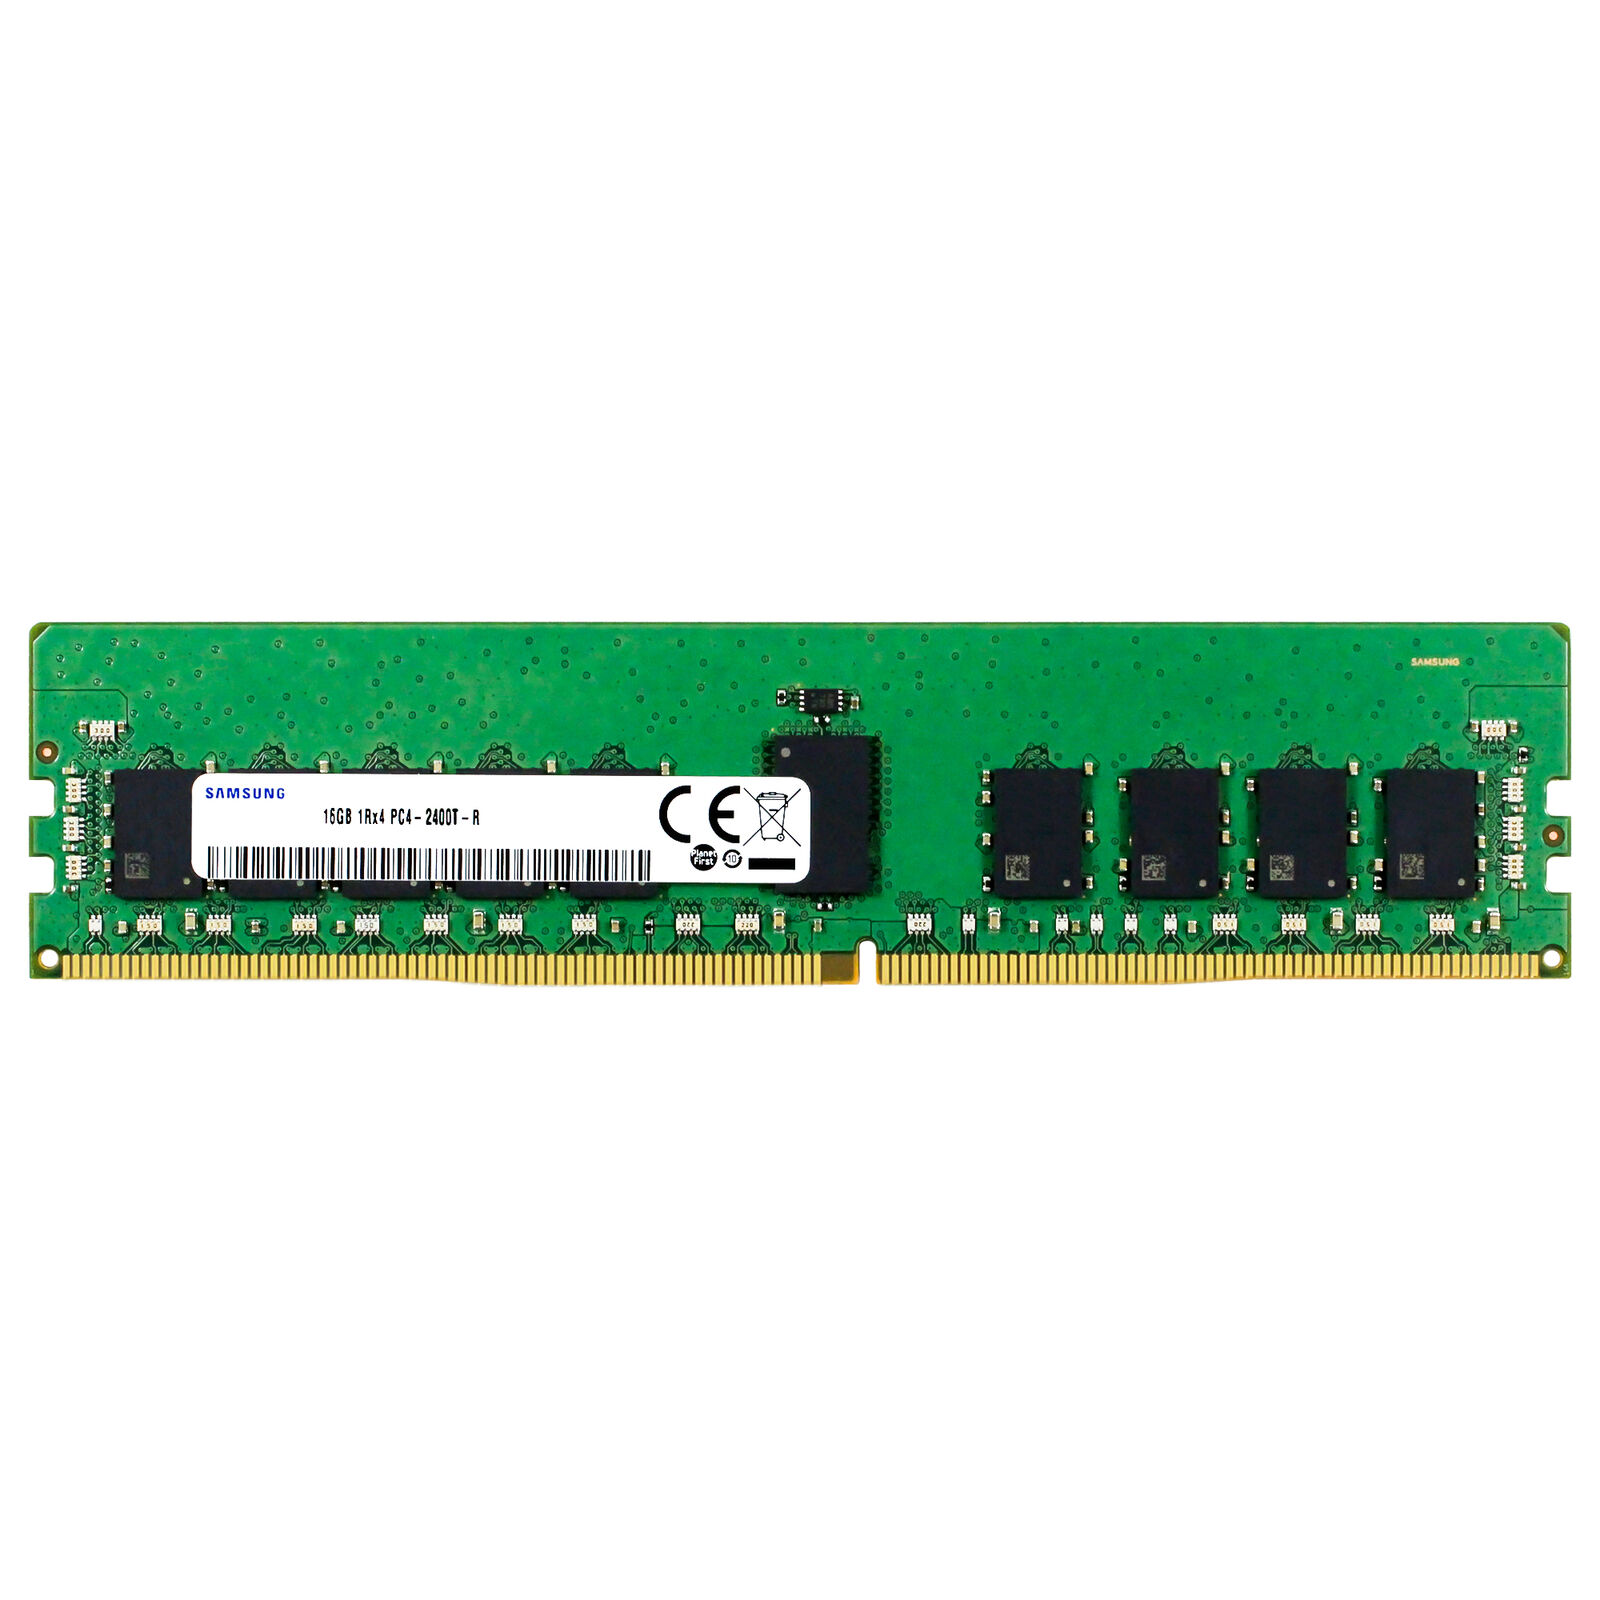 Samsung 16GB 1Rx4 PC4-2400 RDIMM DDR4-19200 ECC REG Registered Server Memory RAM